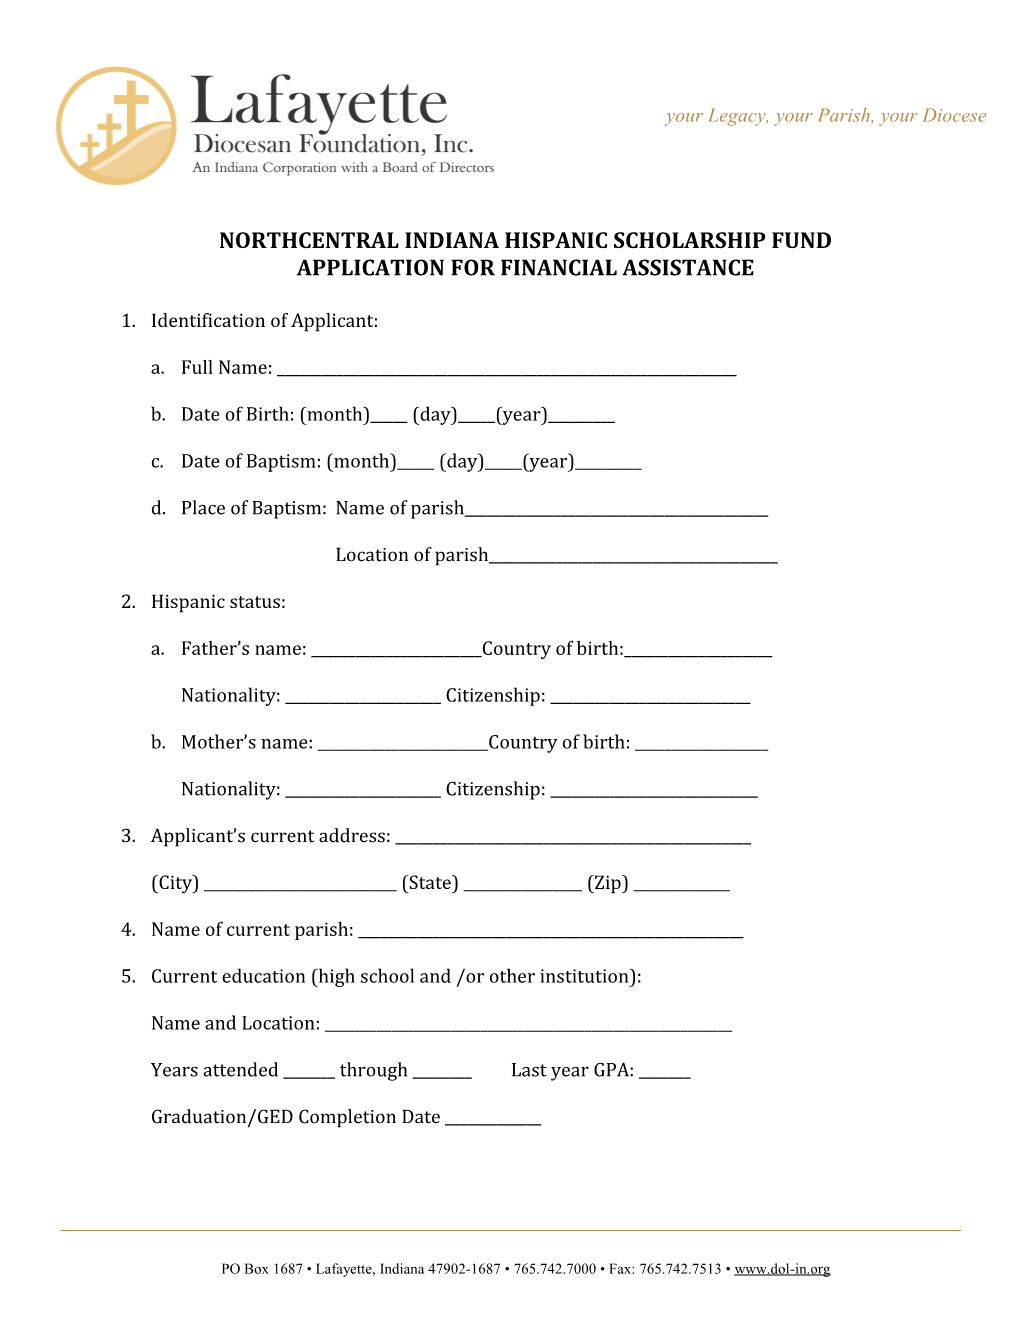 Northcentral Indiana Hispanic Scholarship Fund